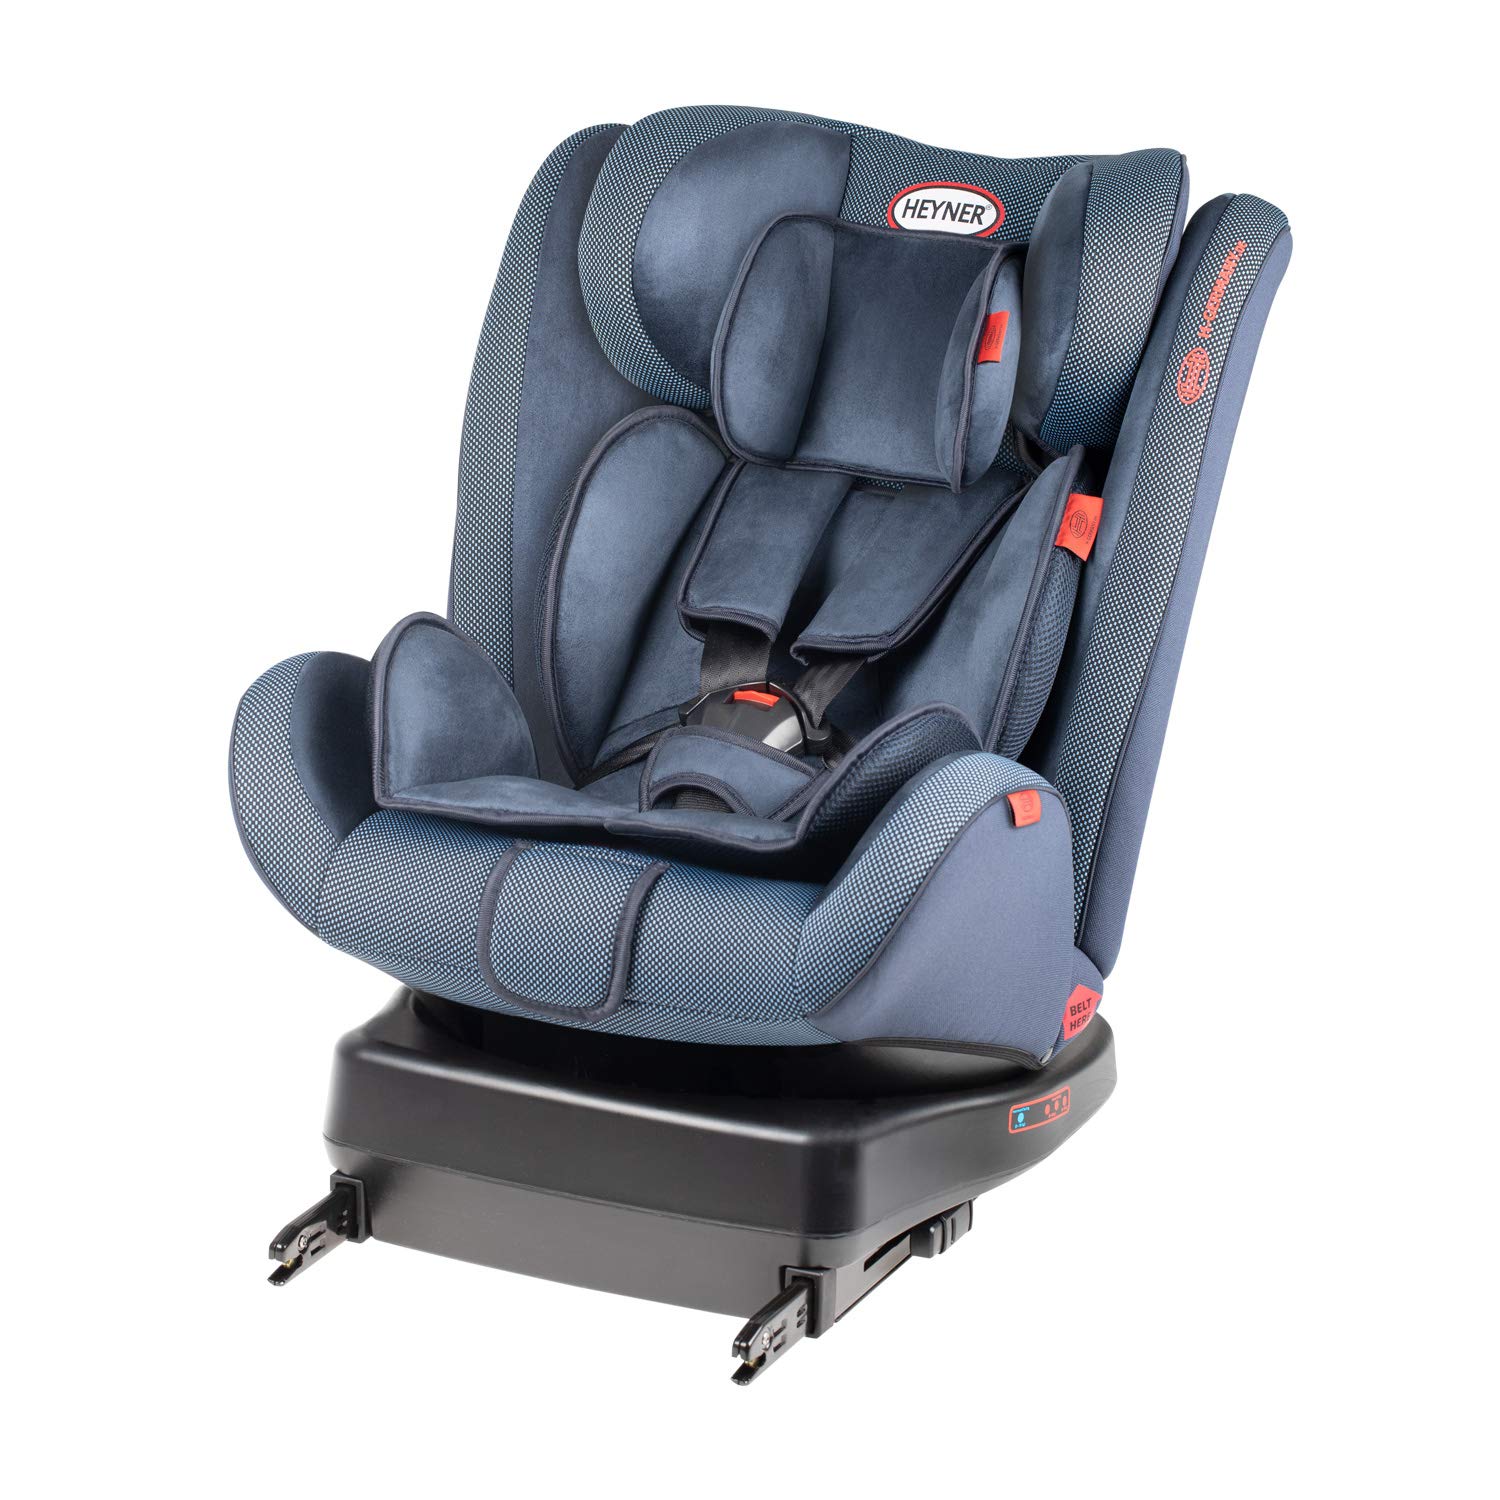 Rotating Reboarder Child Seat Reversing HEYNER (Cosmic Blue)